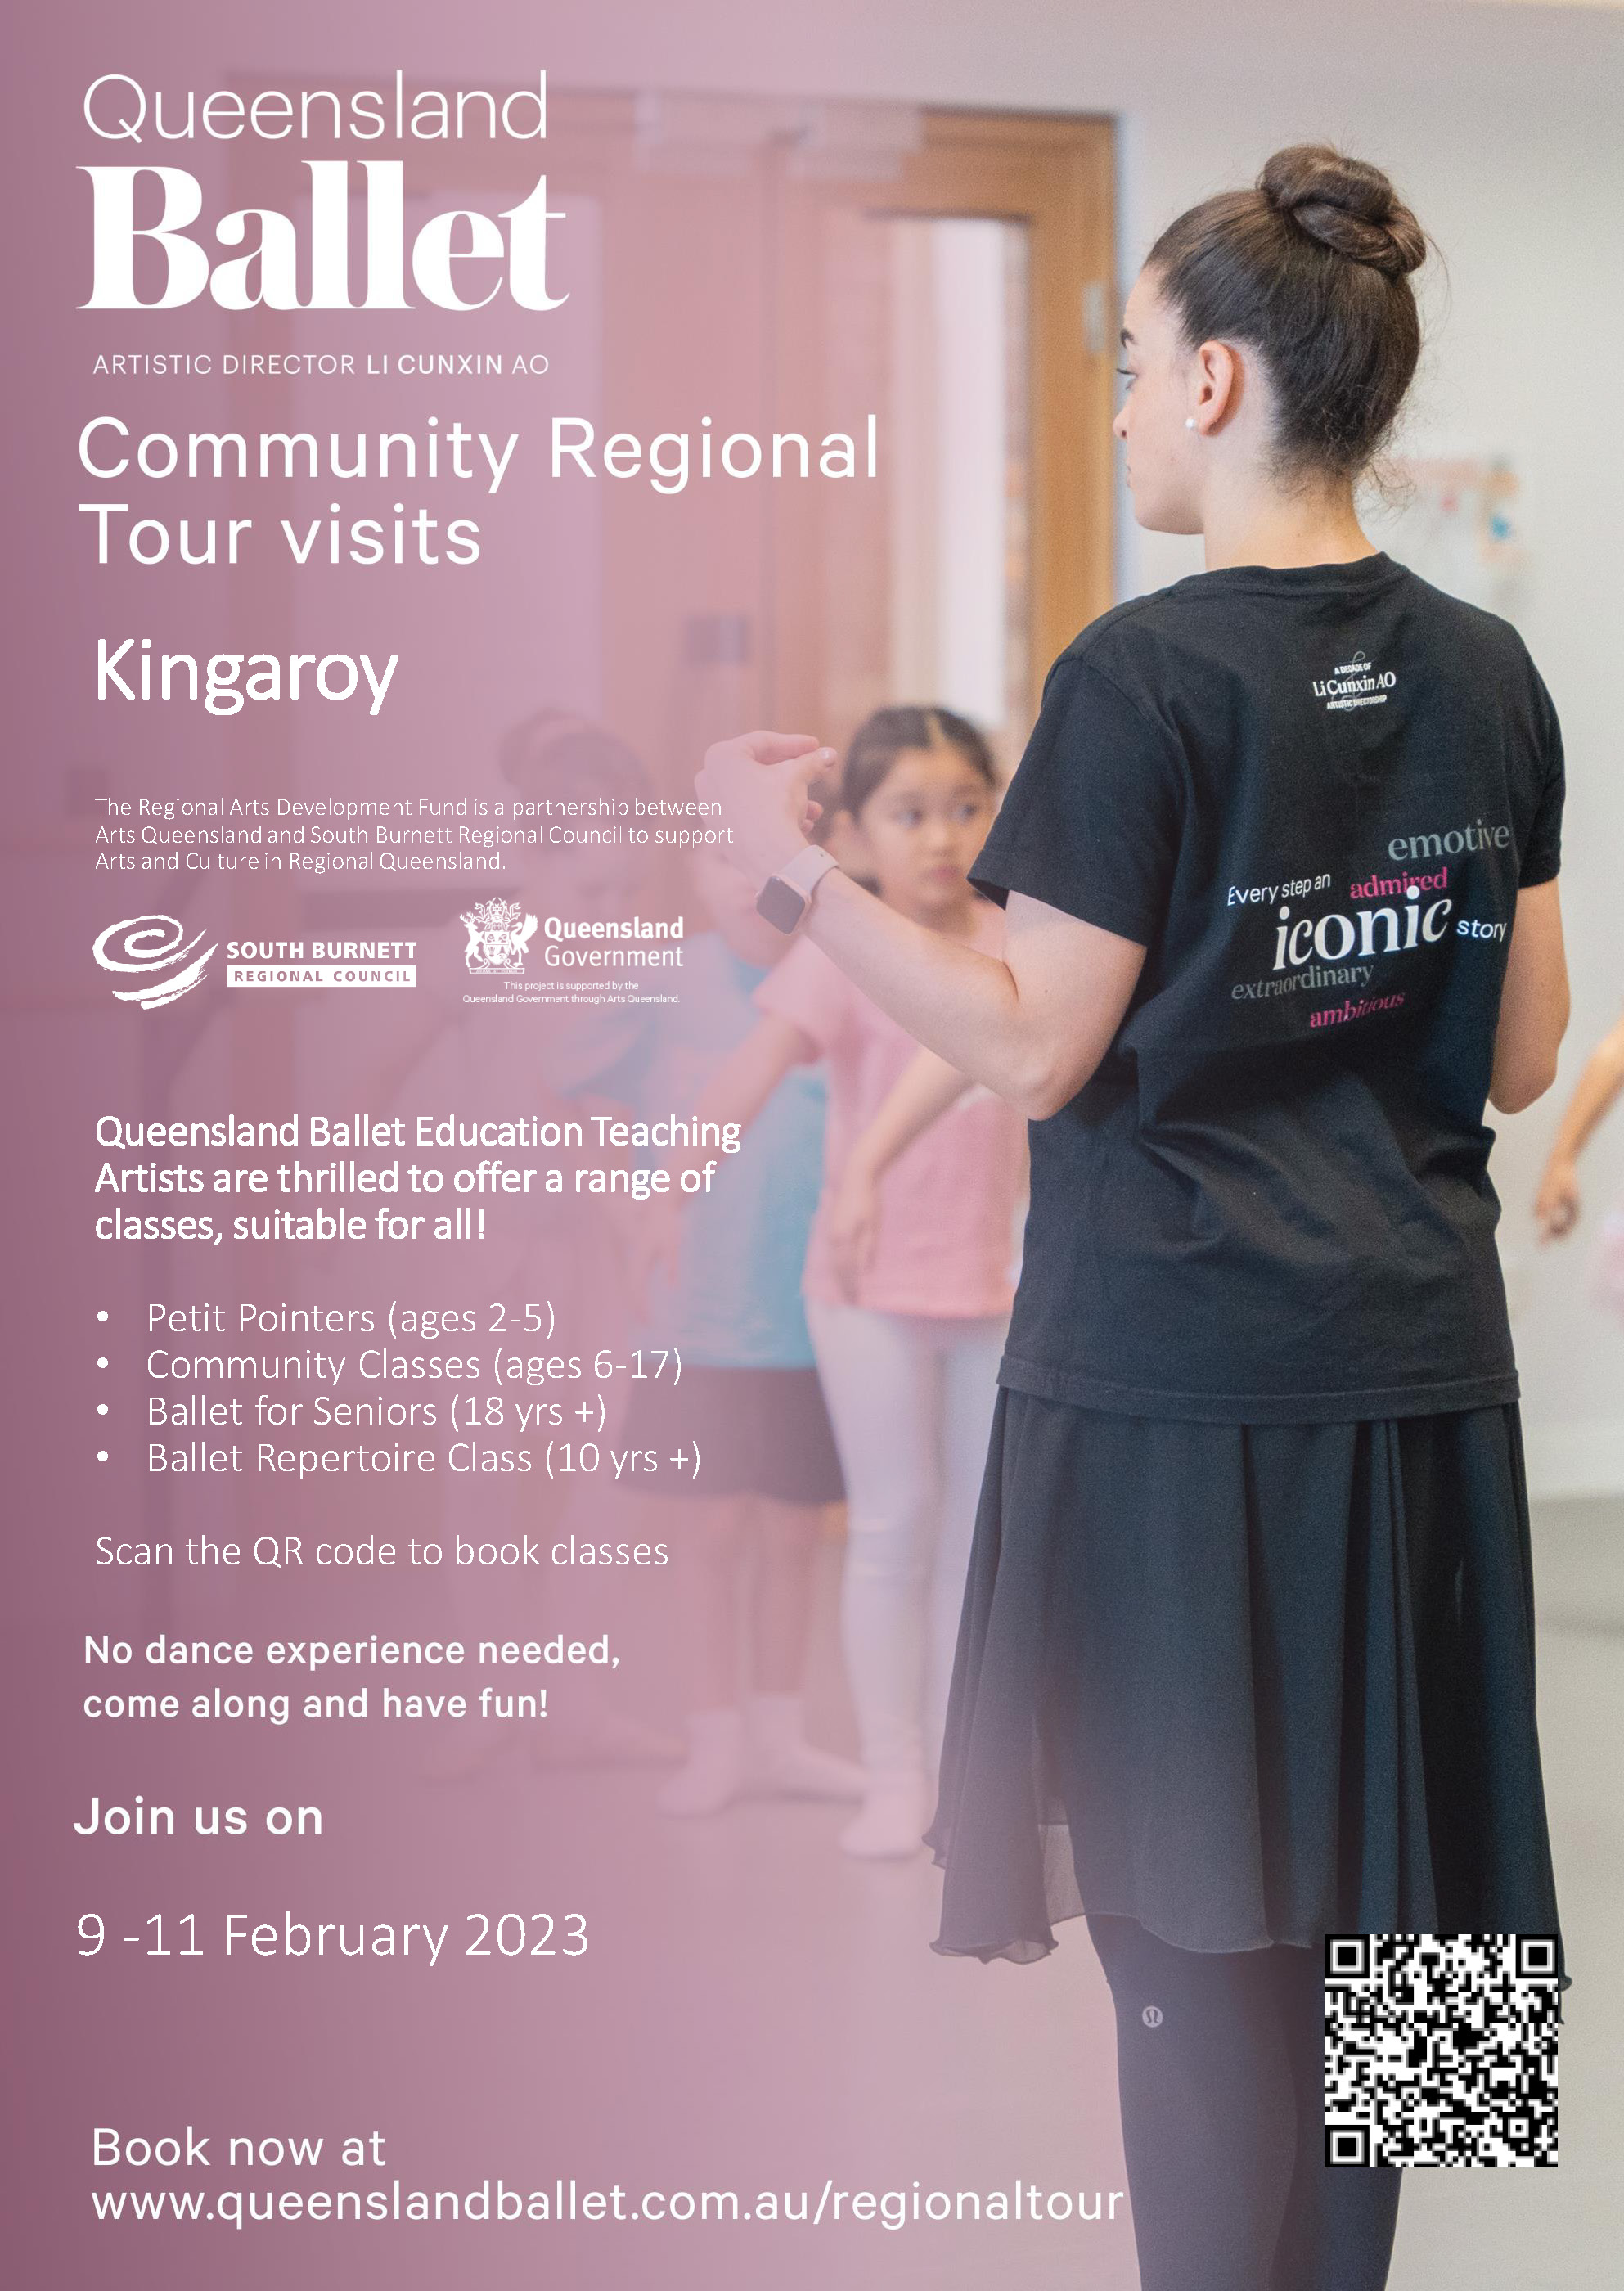 23 01 2023 Community regional tour visits poster kingaroy 2023 002